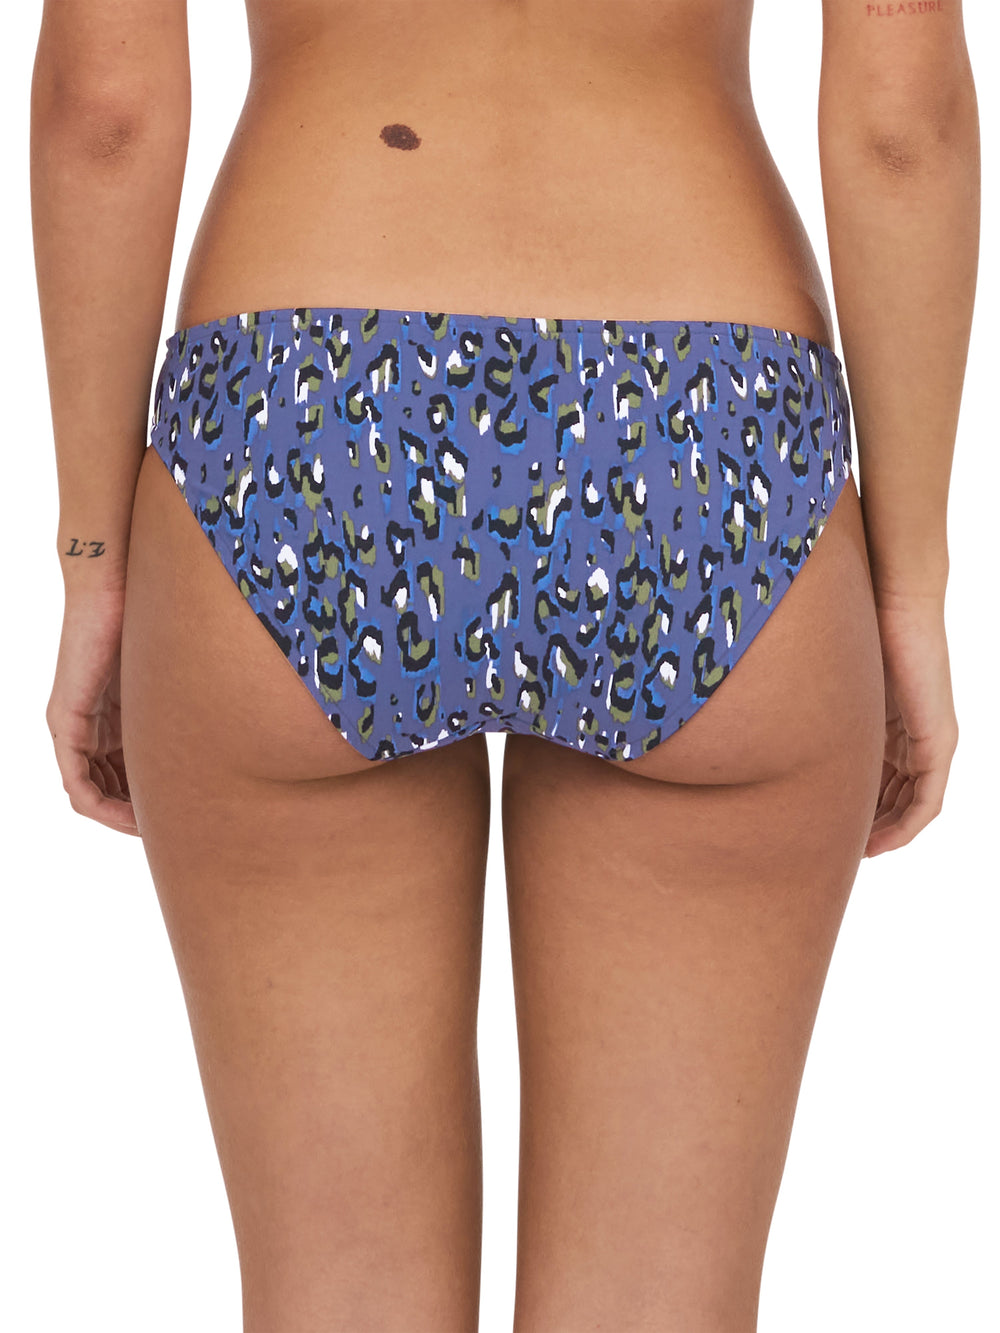 Chantelle Swimwear Eos Brief - Braguita de bikini de leopardo azul Chantelle